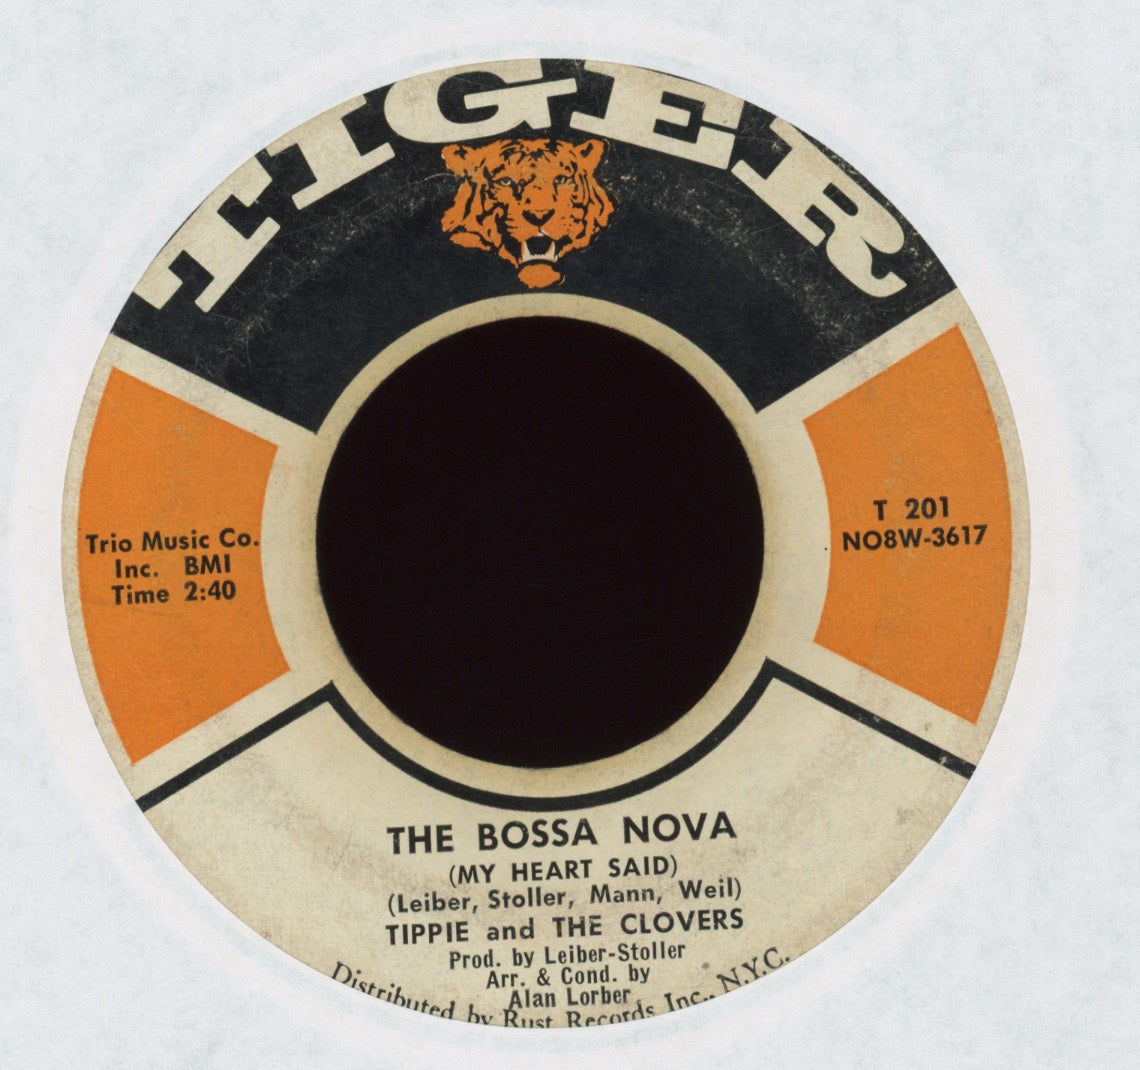 Tippie & The Clovers - The Bossa Nova (My Heart Said) on Tiger